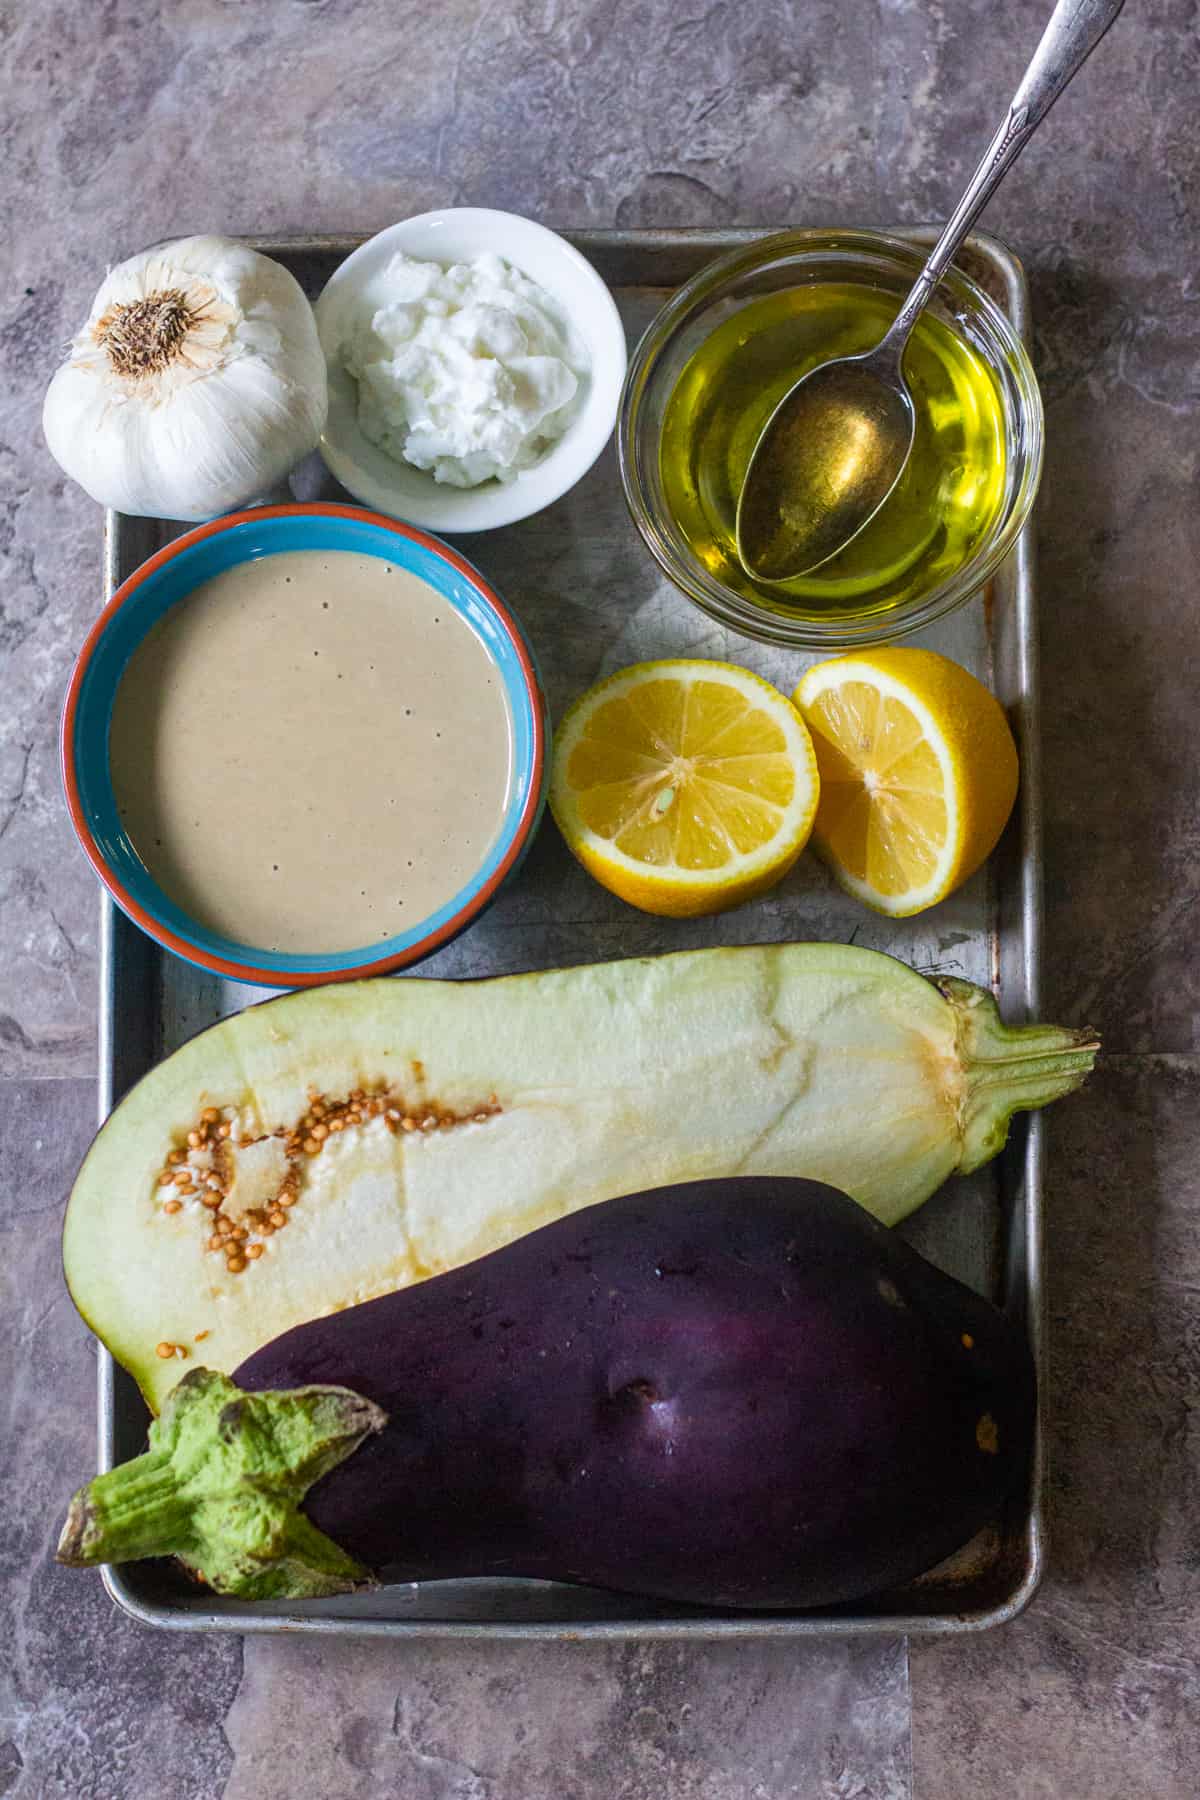 Baba Ganoush ingredients are eggplants, tahini, garlic, yogurt, lemon juice and olive oil. 